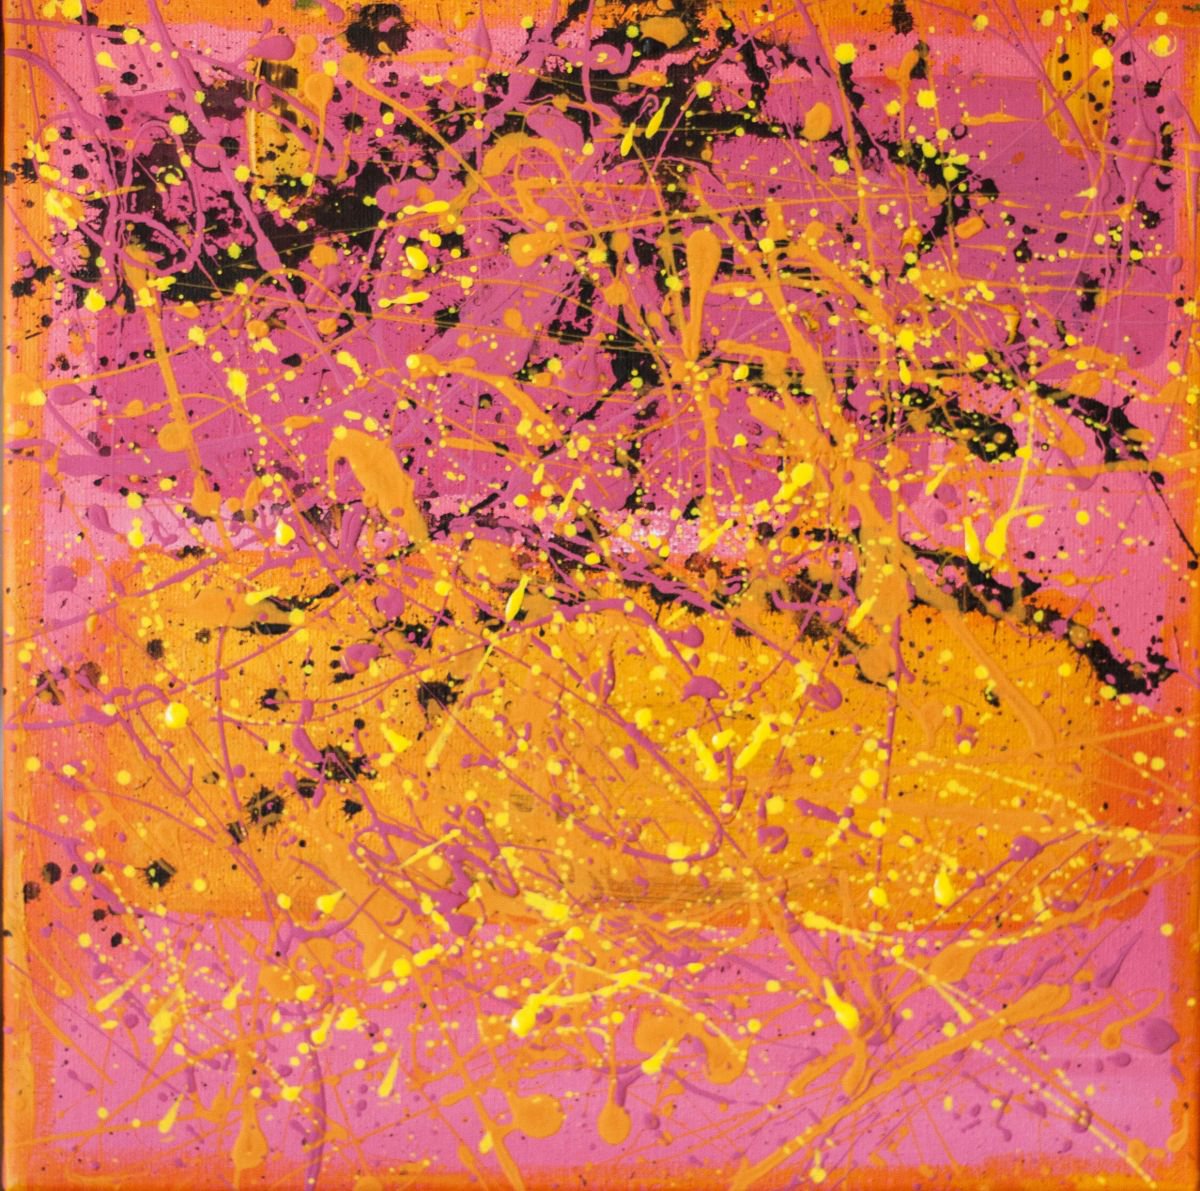 Bright Pink and Yellow Abstract Acrylic Painting 25x25 cm by Ihnatova Tetjana